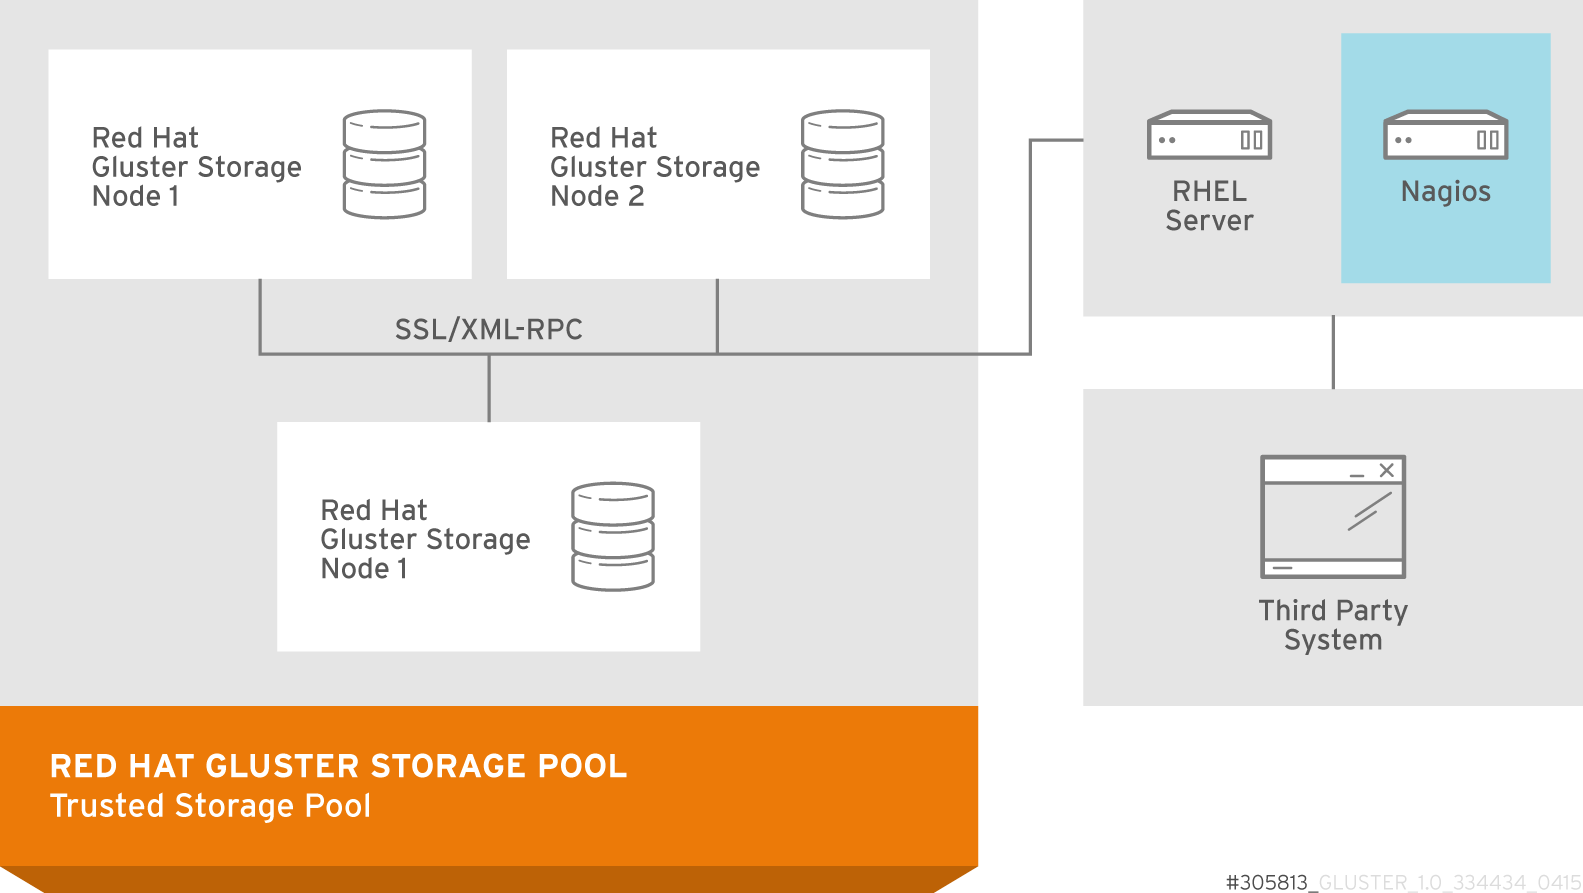 Nagios deployed on Red Hat Gluster Storage Console Server